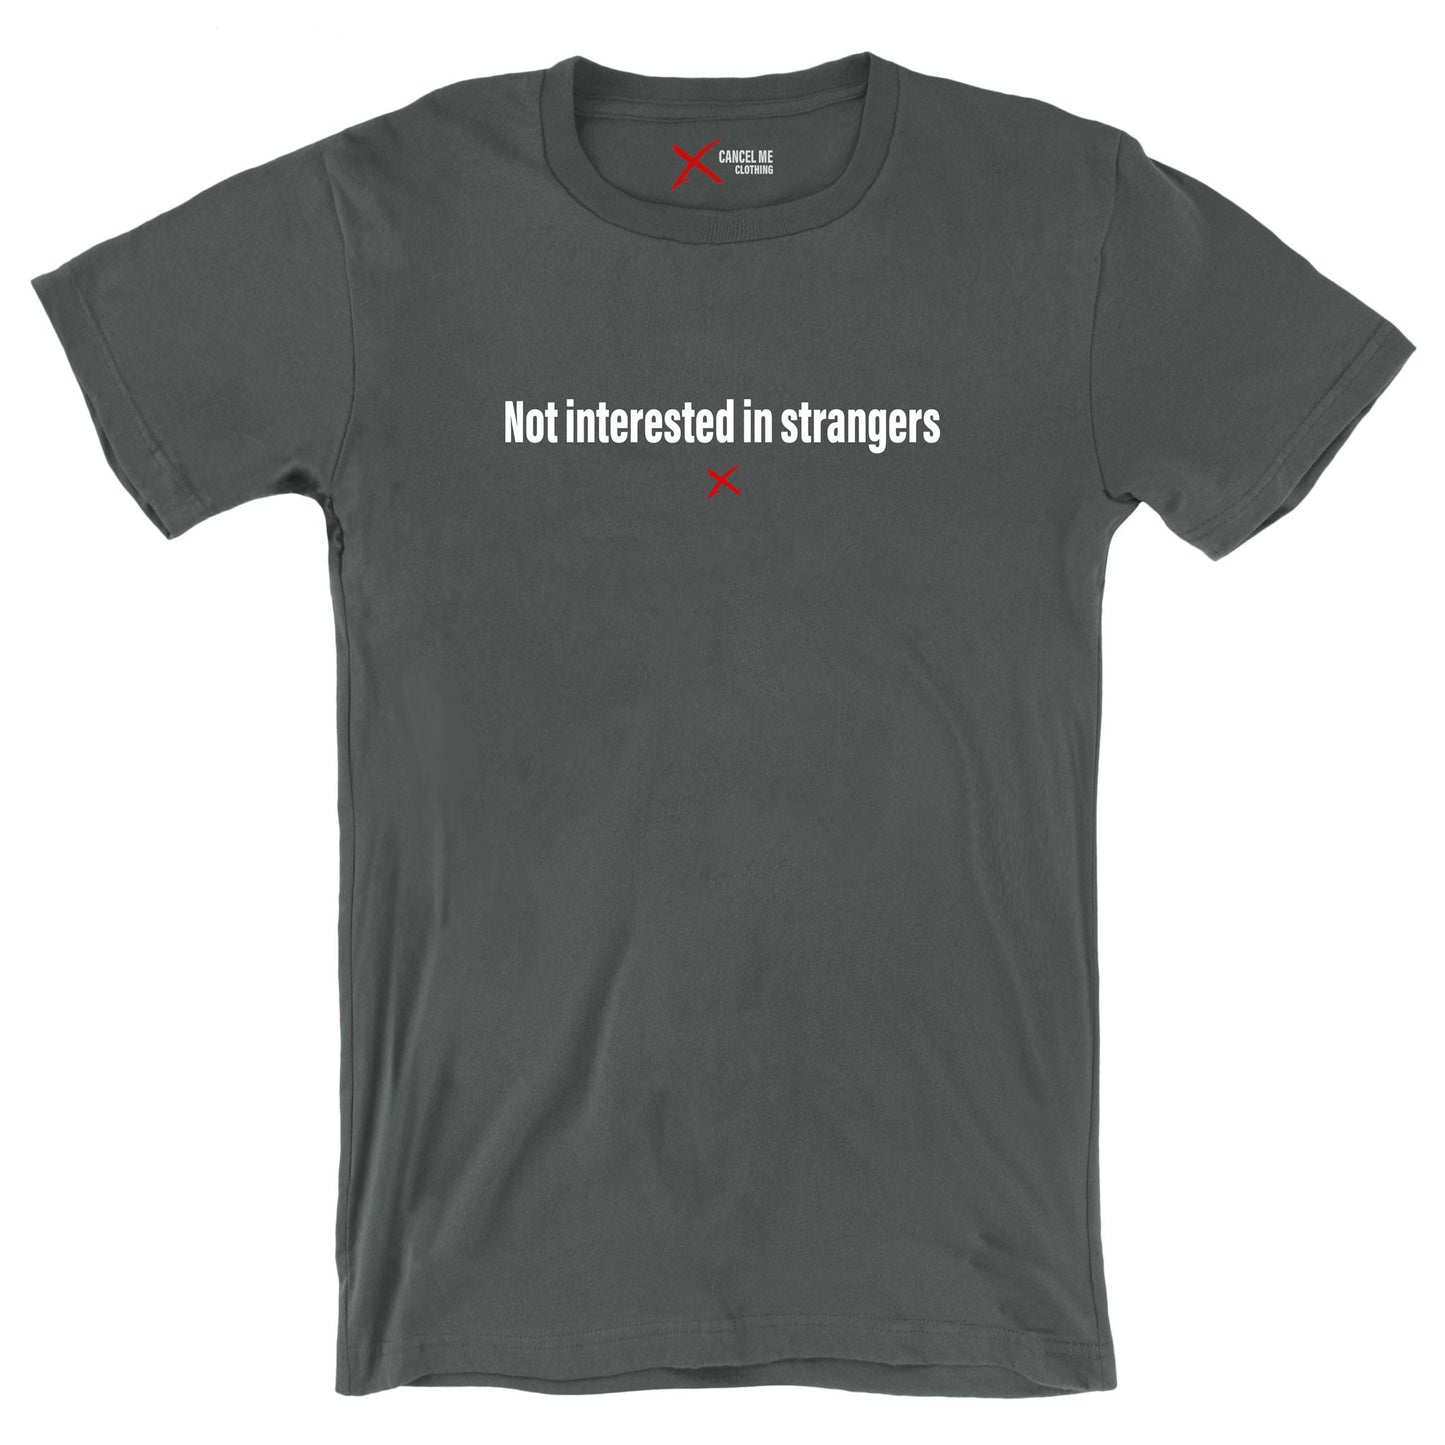 Not interested in strangers - Shirt